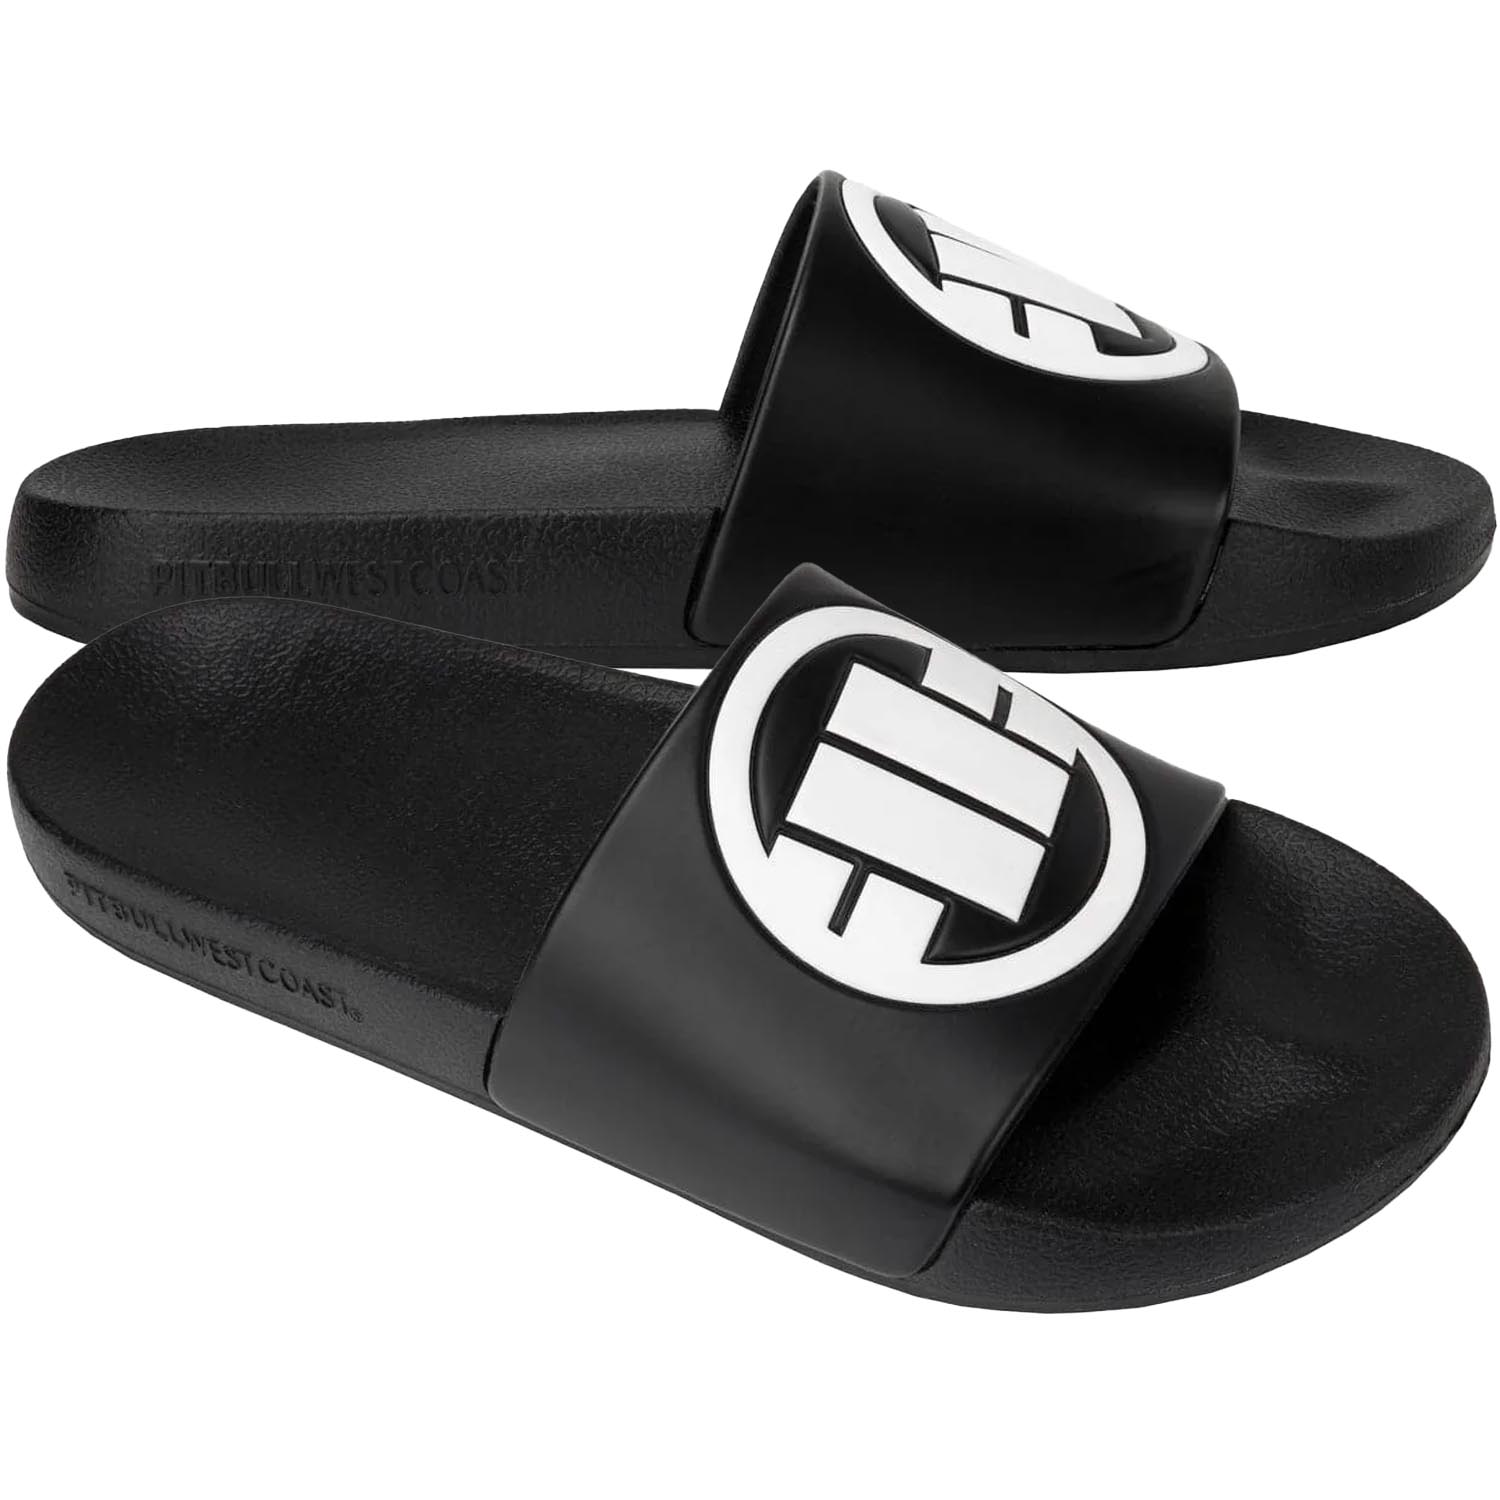 Pit Bull West Coast Flip Flops, New Logo, schwarz-weiß